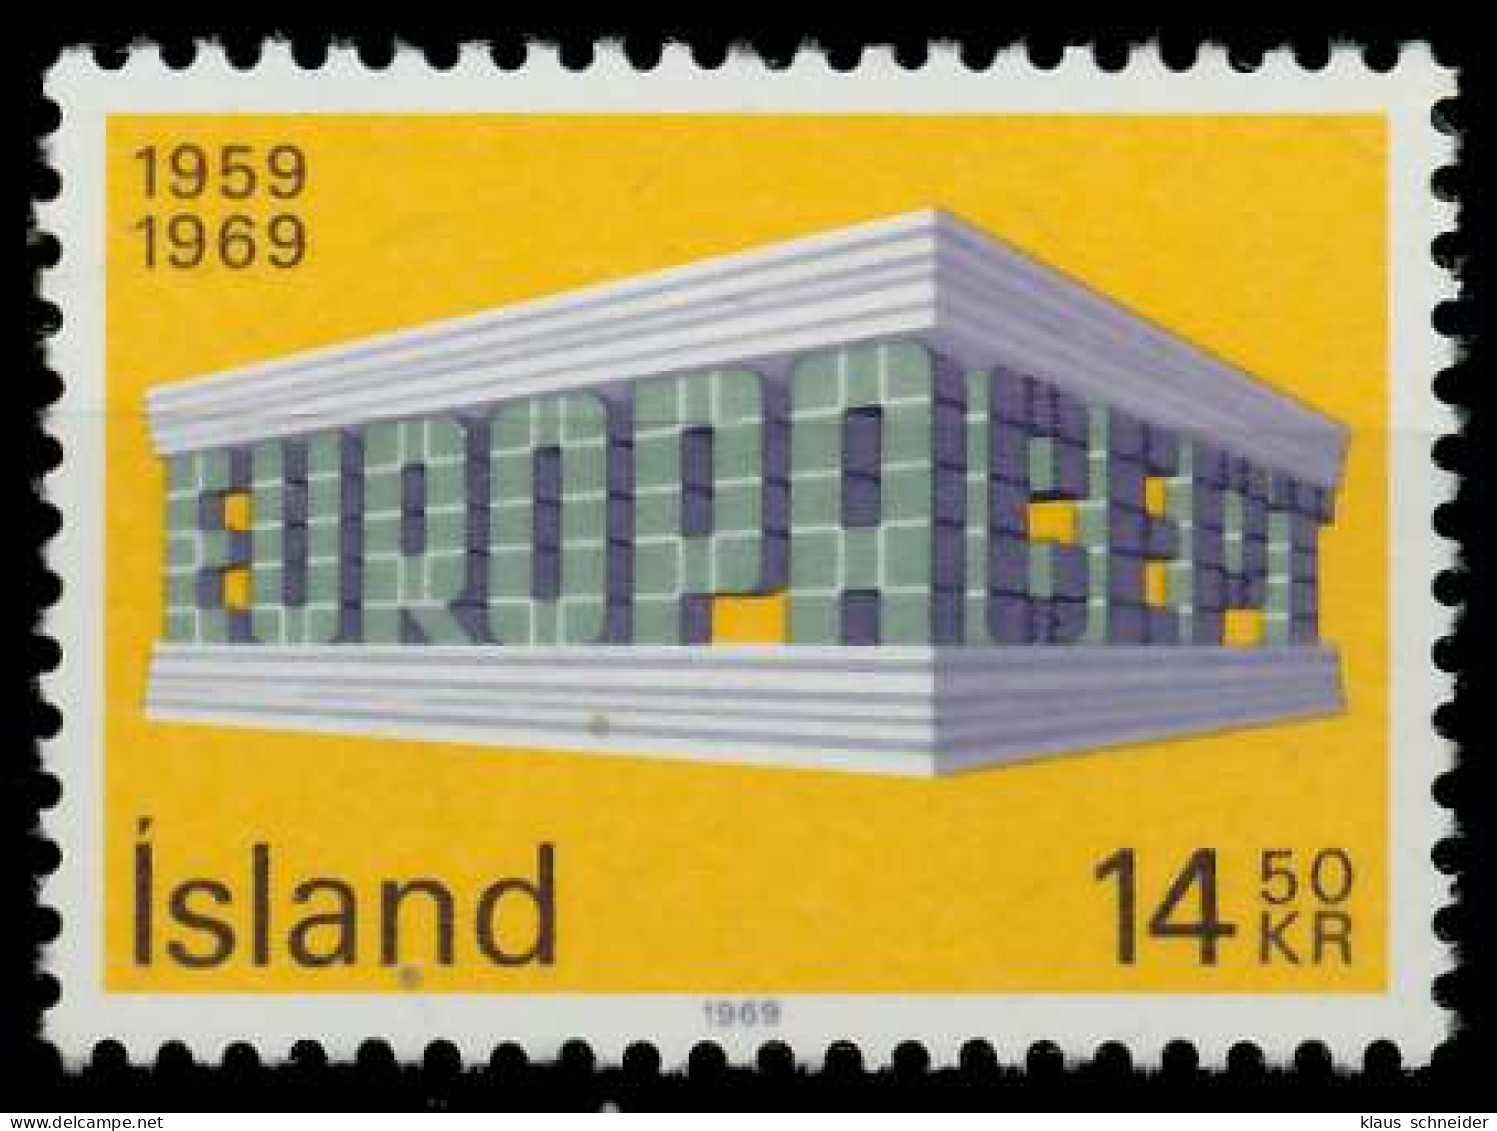 ISLAND 1969 Nr 429 Postfrisch SA5E84A - Nuevos